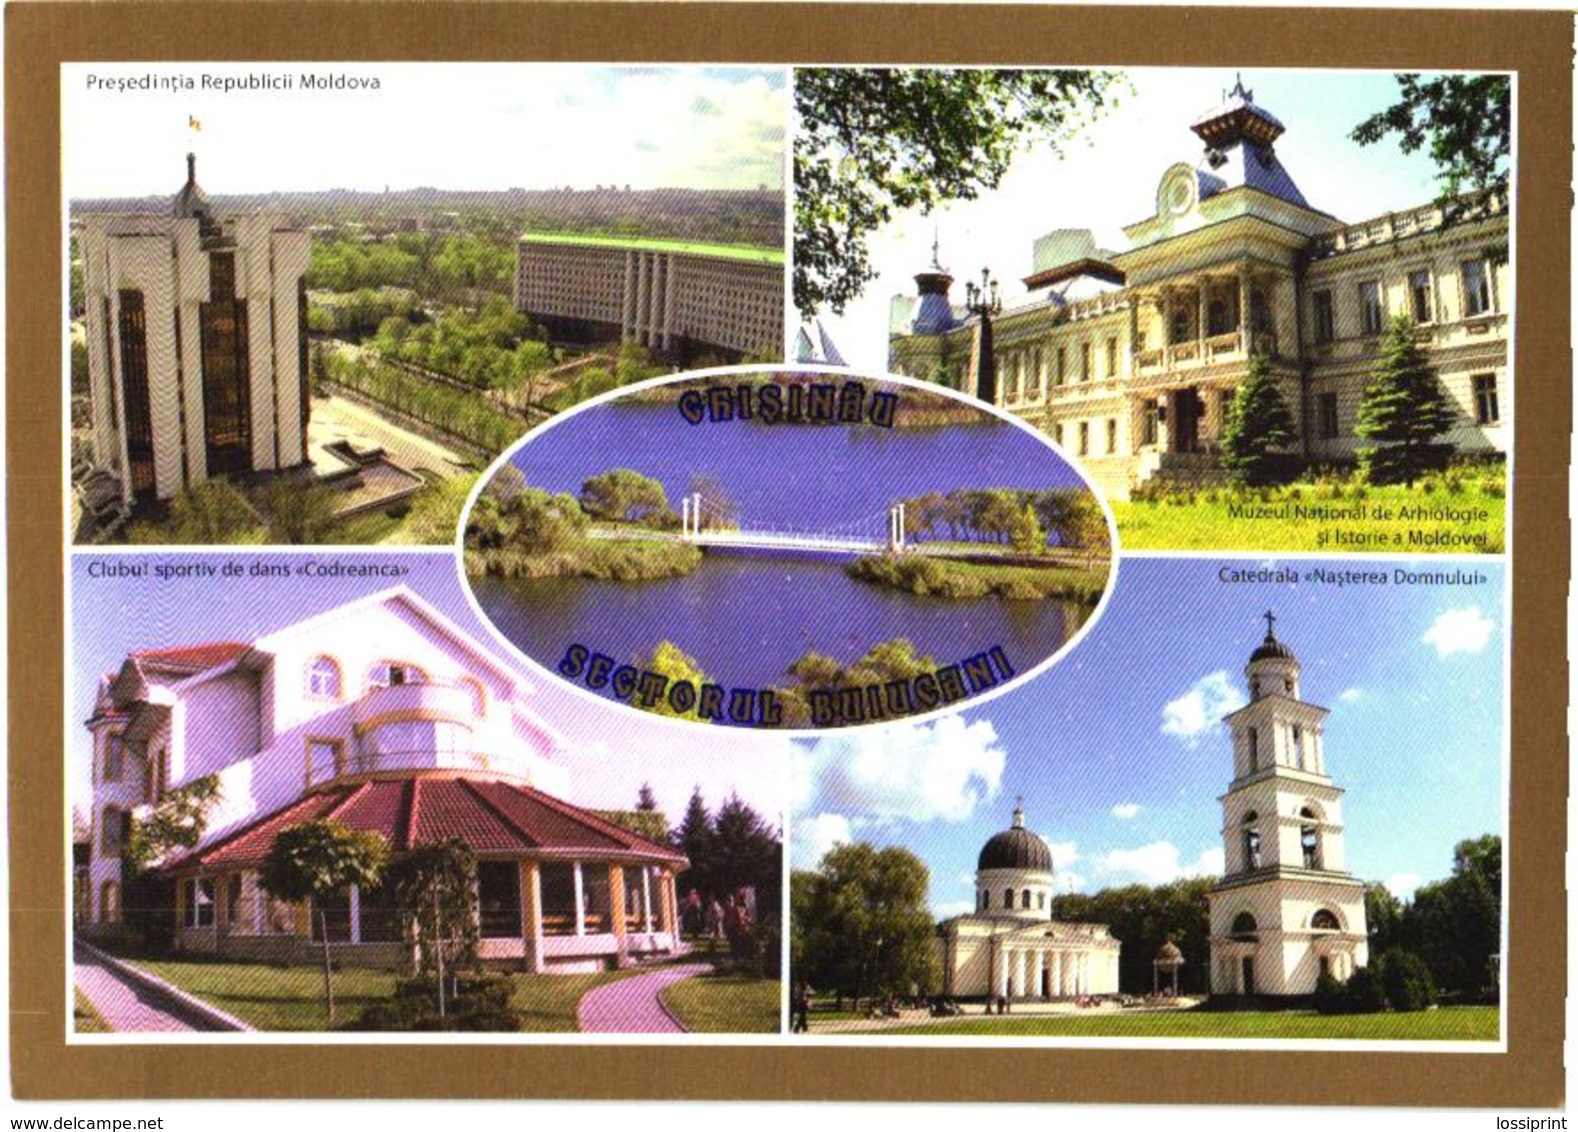 Moldova:Chisinau, Buiucani Sector, President Palace, Sport Club, Church, Museum, Bridge, 2006 - Moldova